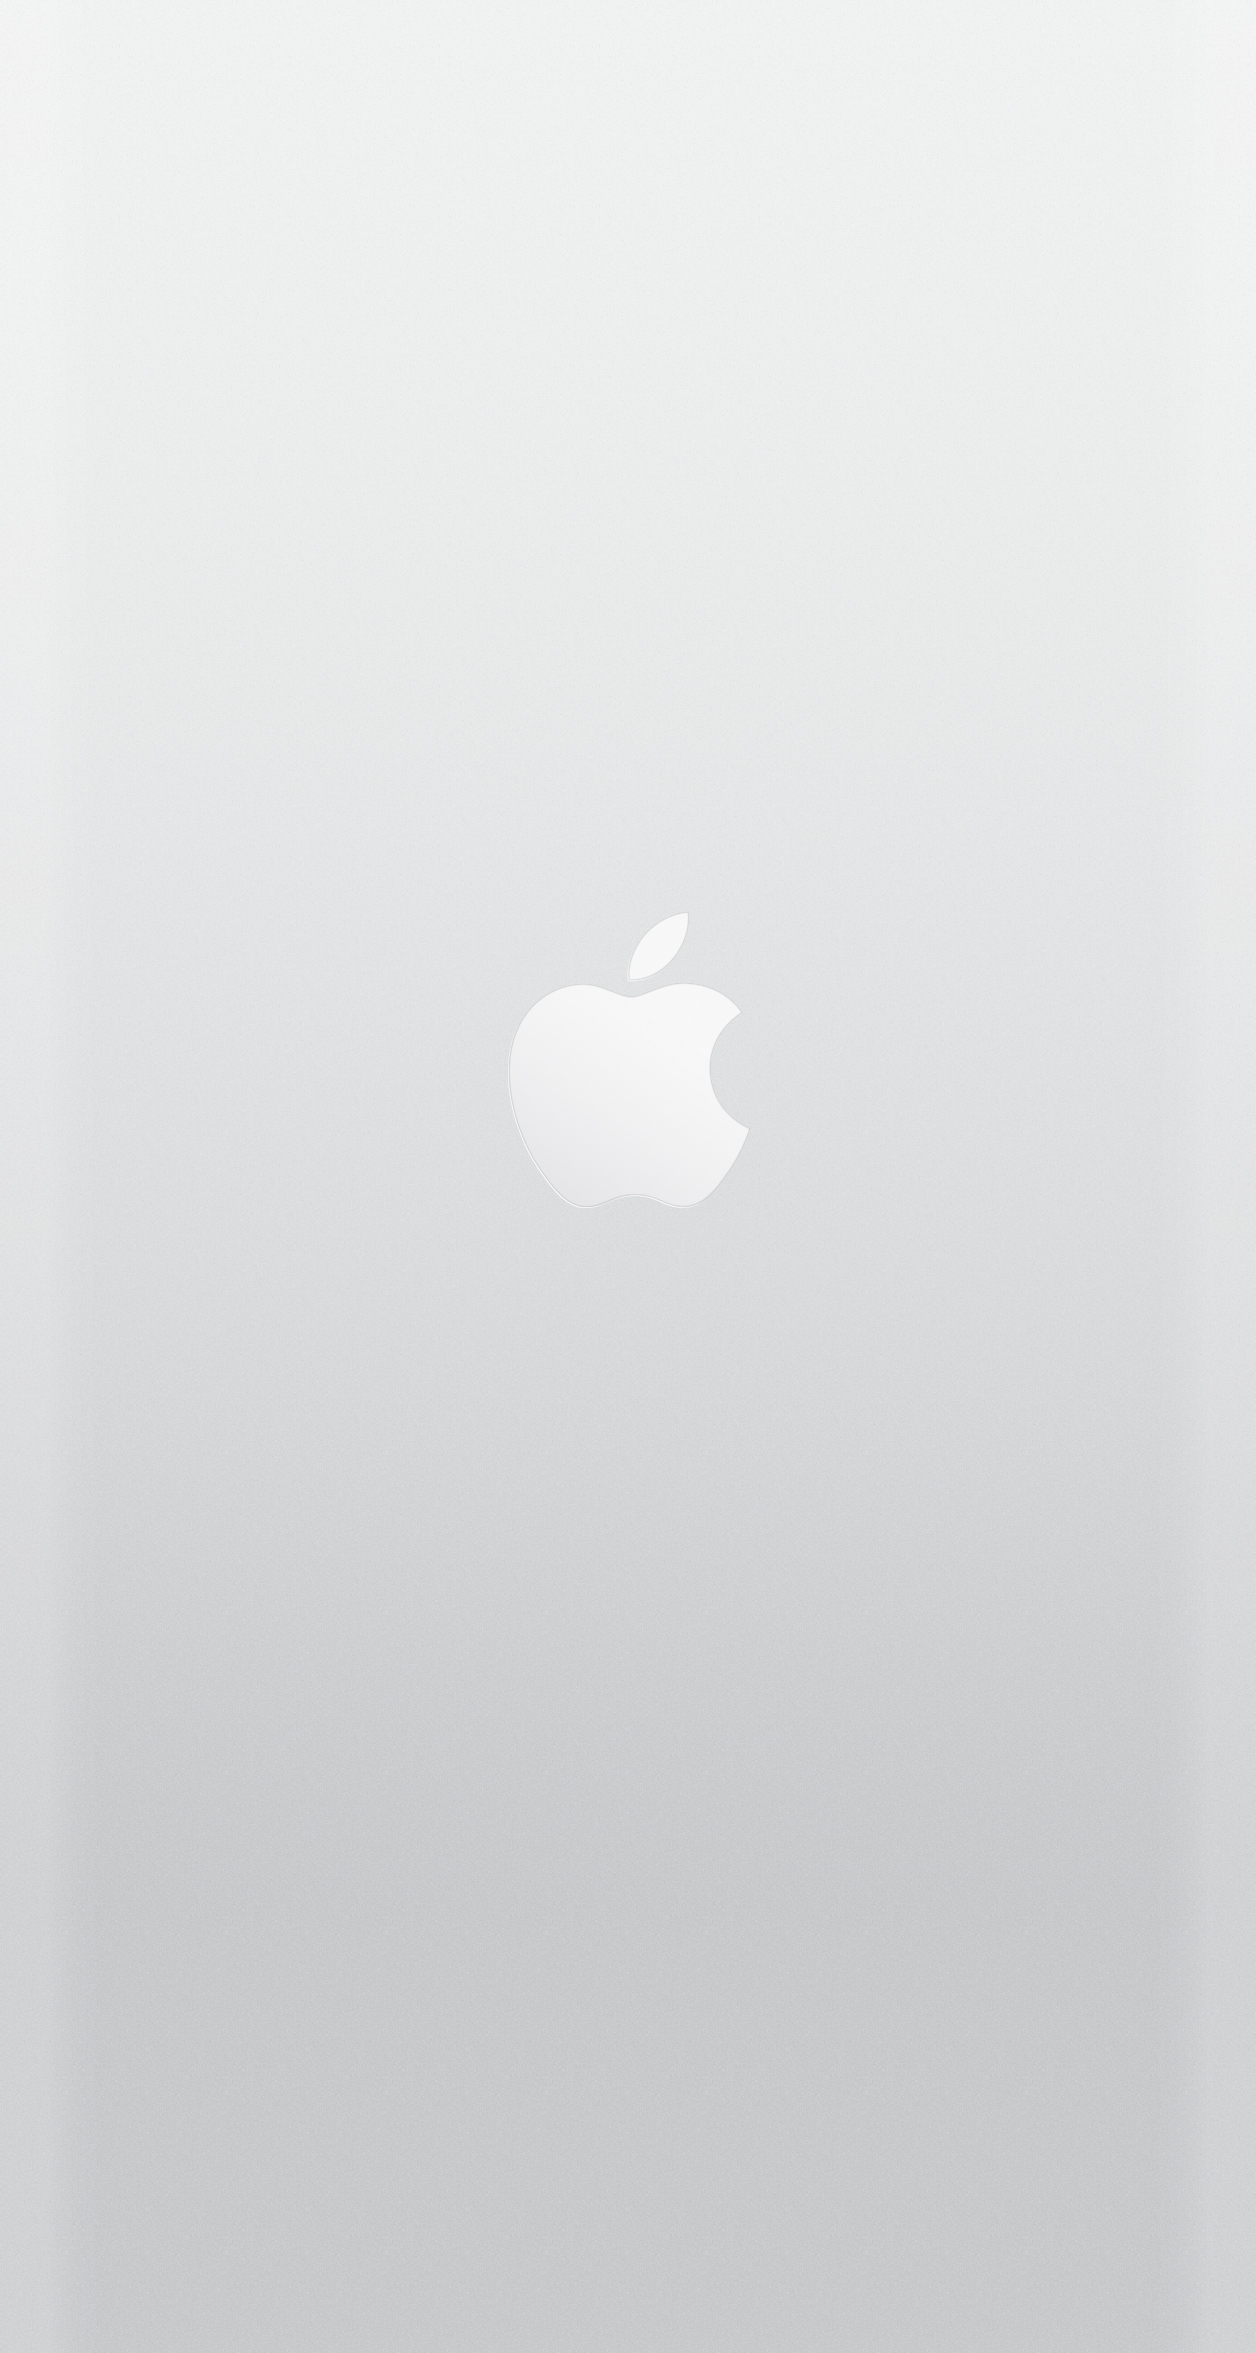 Apple Iphone Images Pixelstalk Net